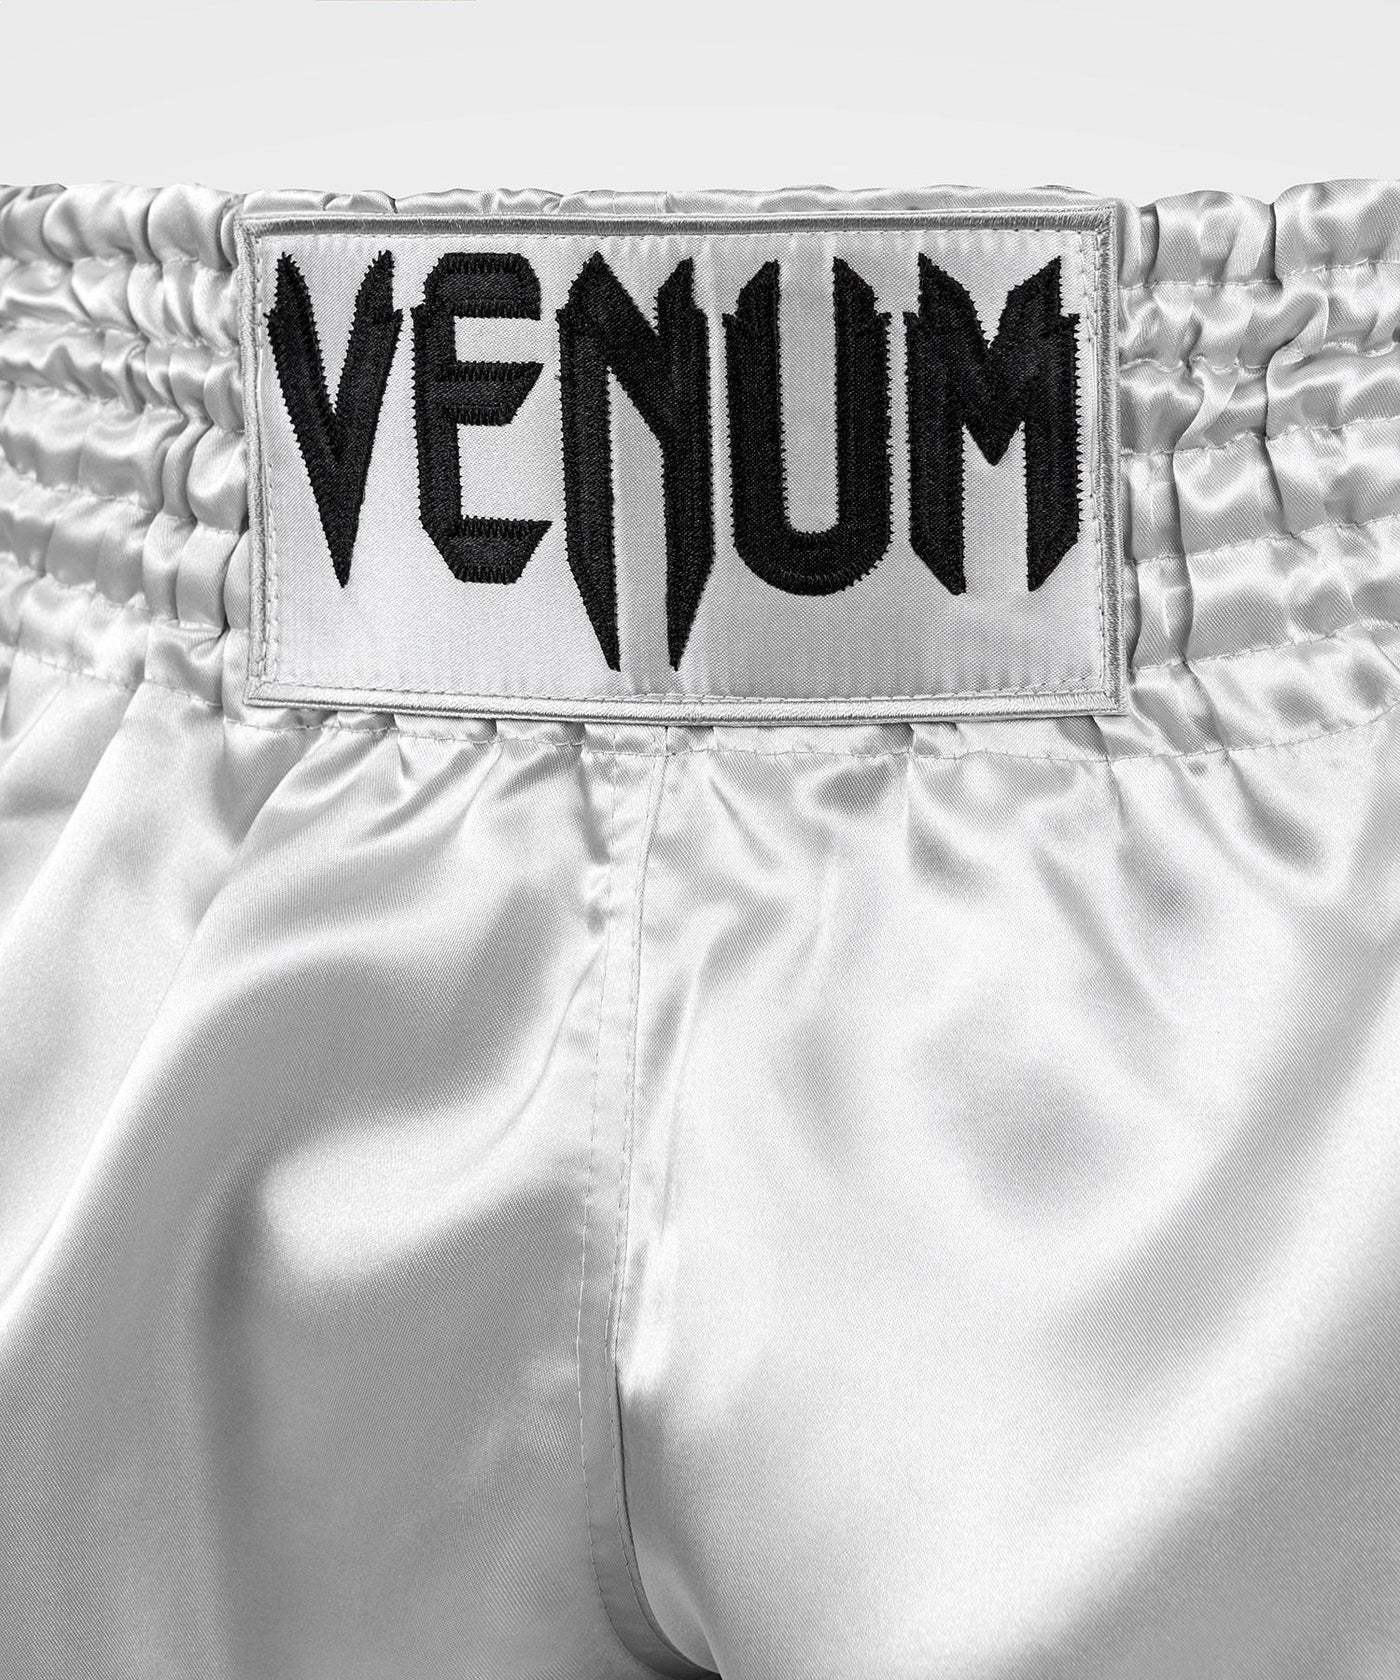 מכנסי איגרוף תאילנדי  Venum Classic Muay Thai Shorts Silver/Black Med